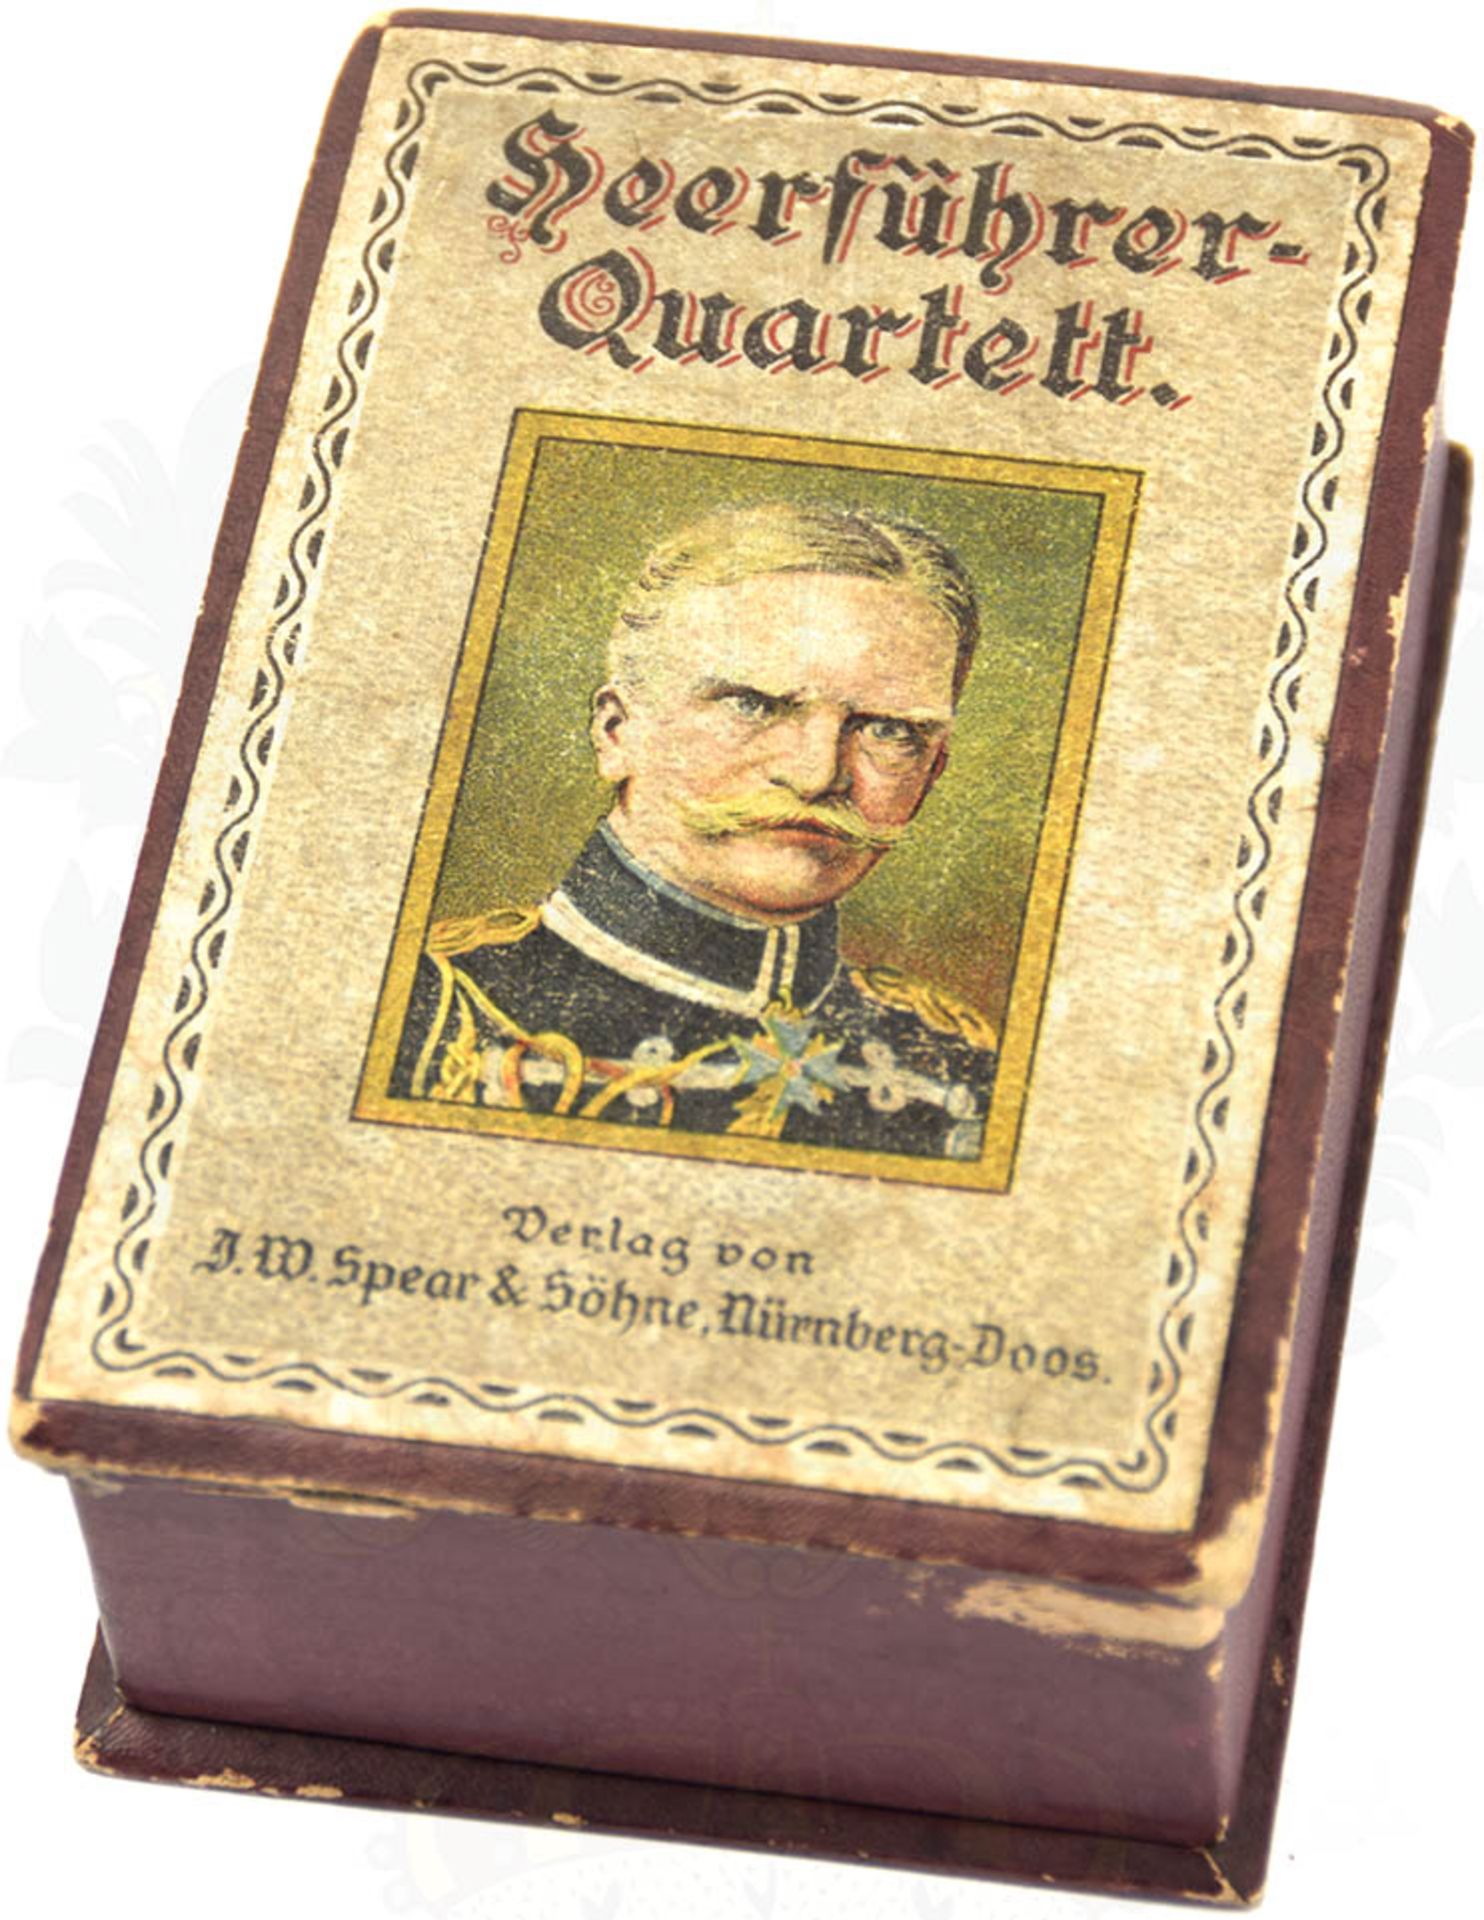 HEERFÜHRER-QUARTETT, Verlag J. W. Spear & Söhne, Nürnberg-Doos, 60 farbige Kunstdruck-Karten mit